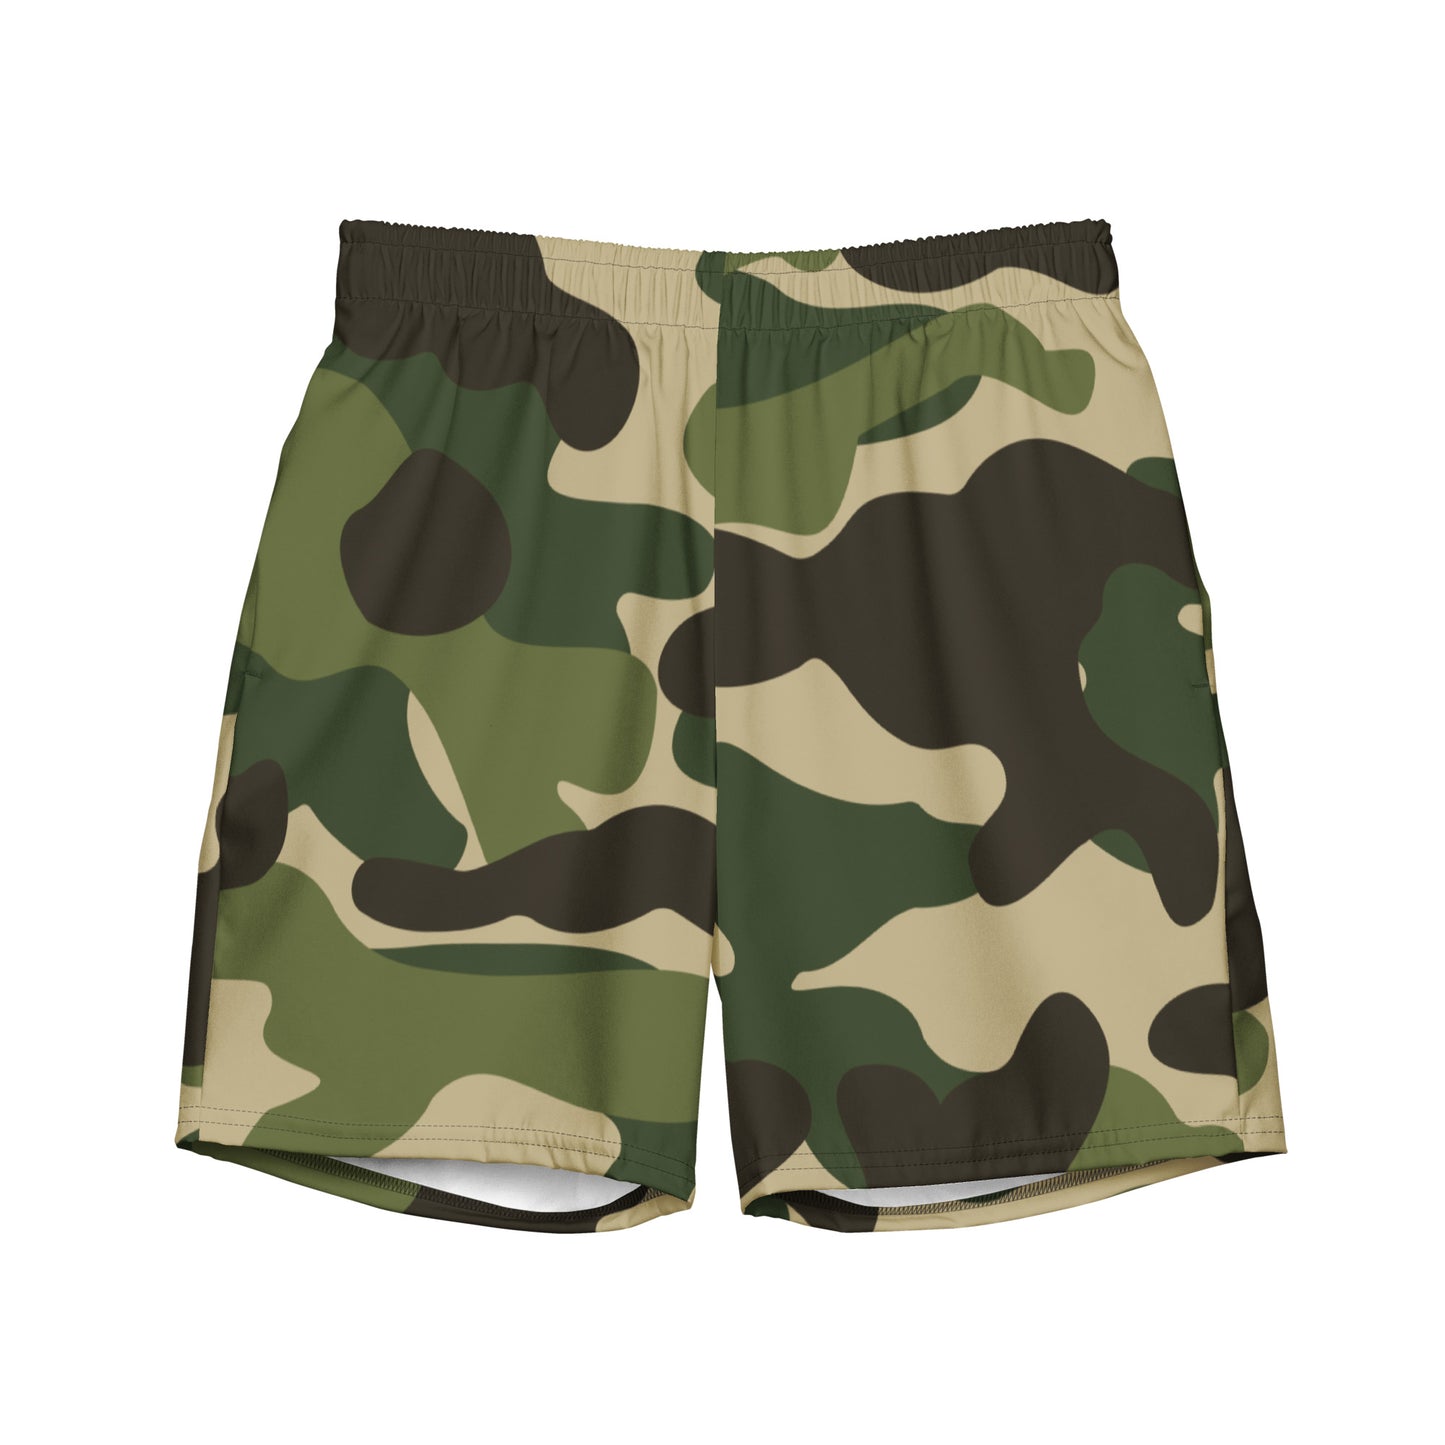 Army - Sustainably Made Men's swim trunks